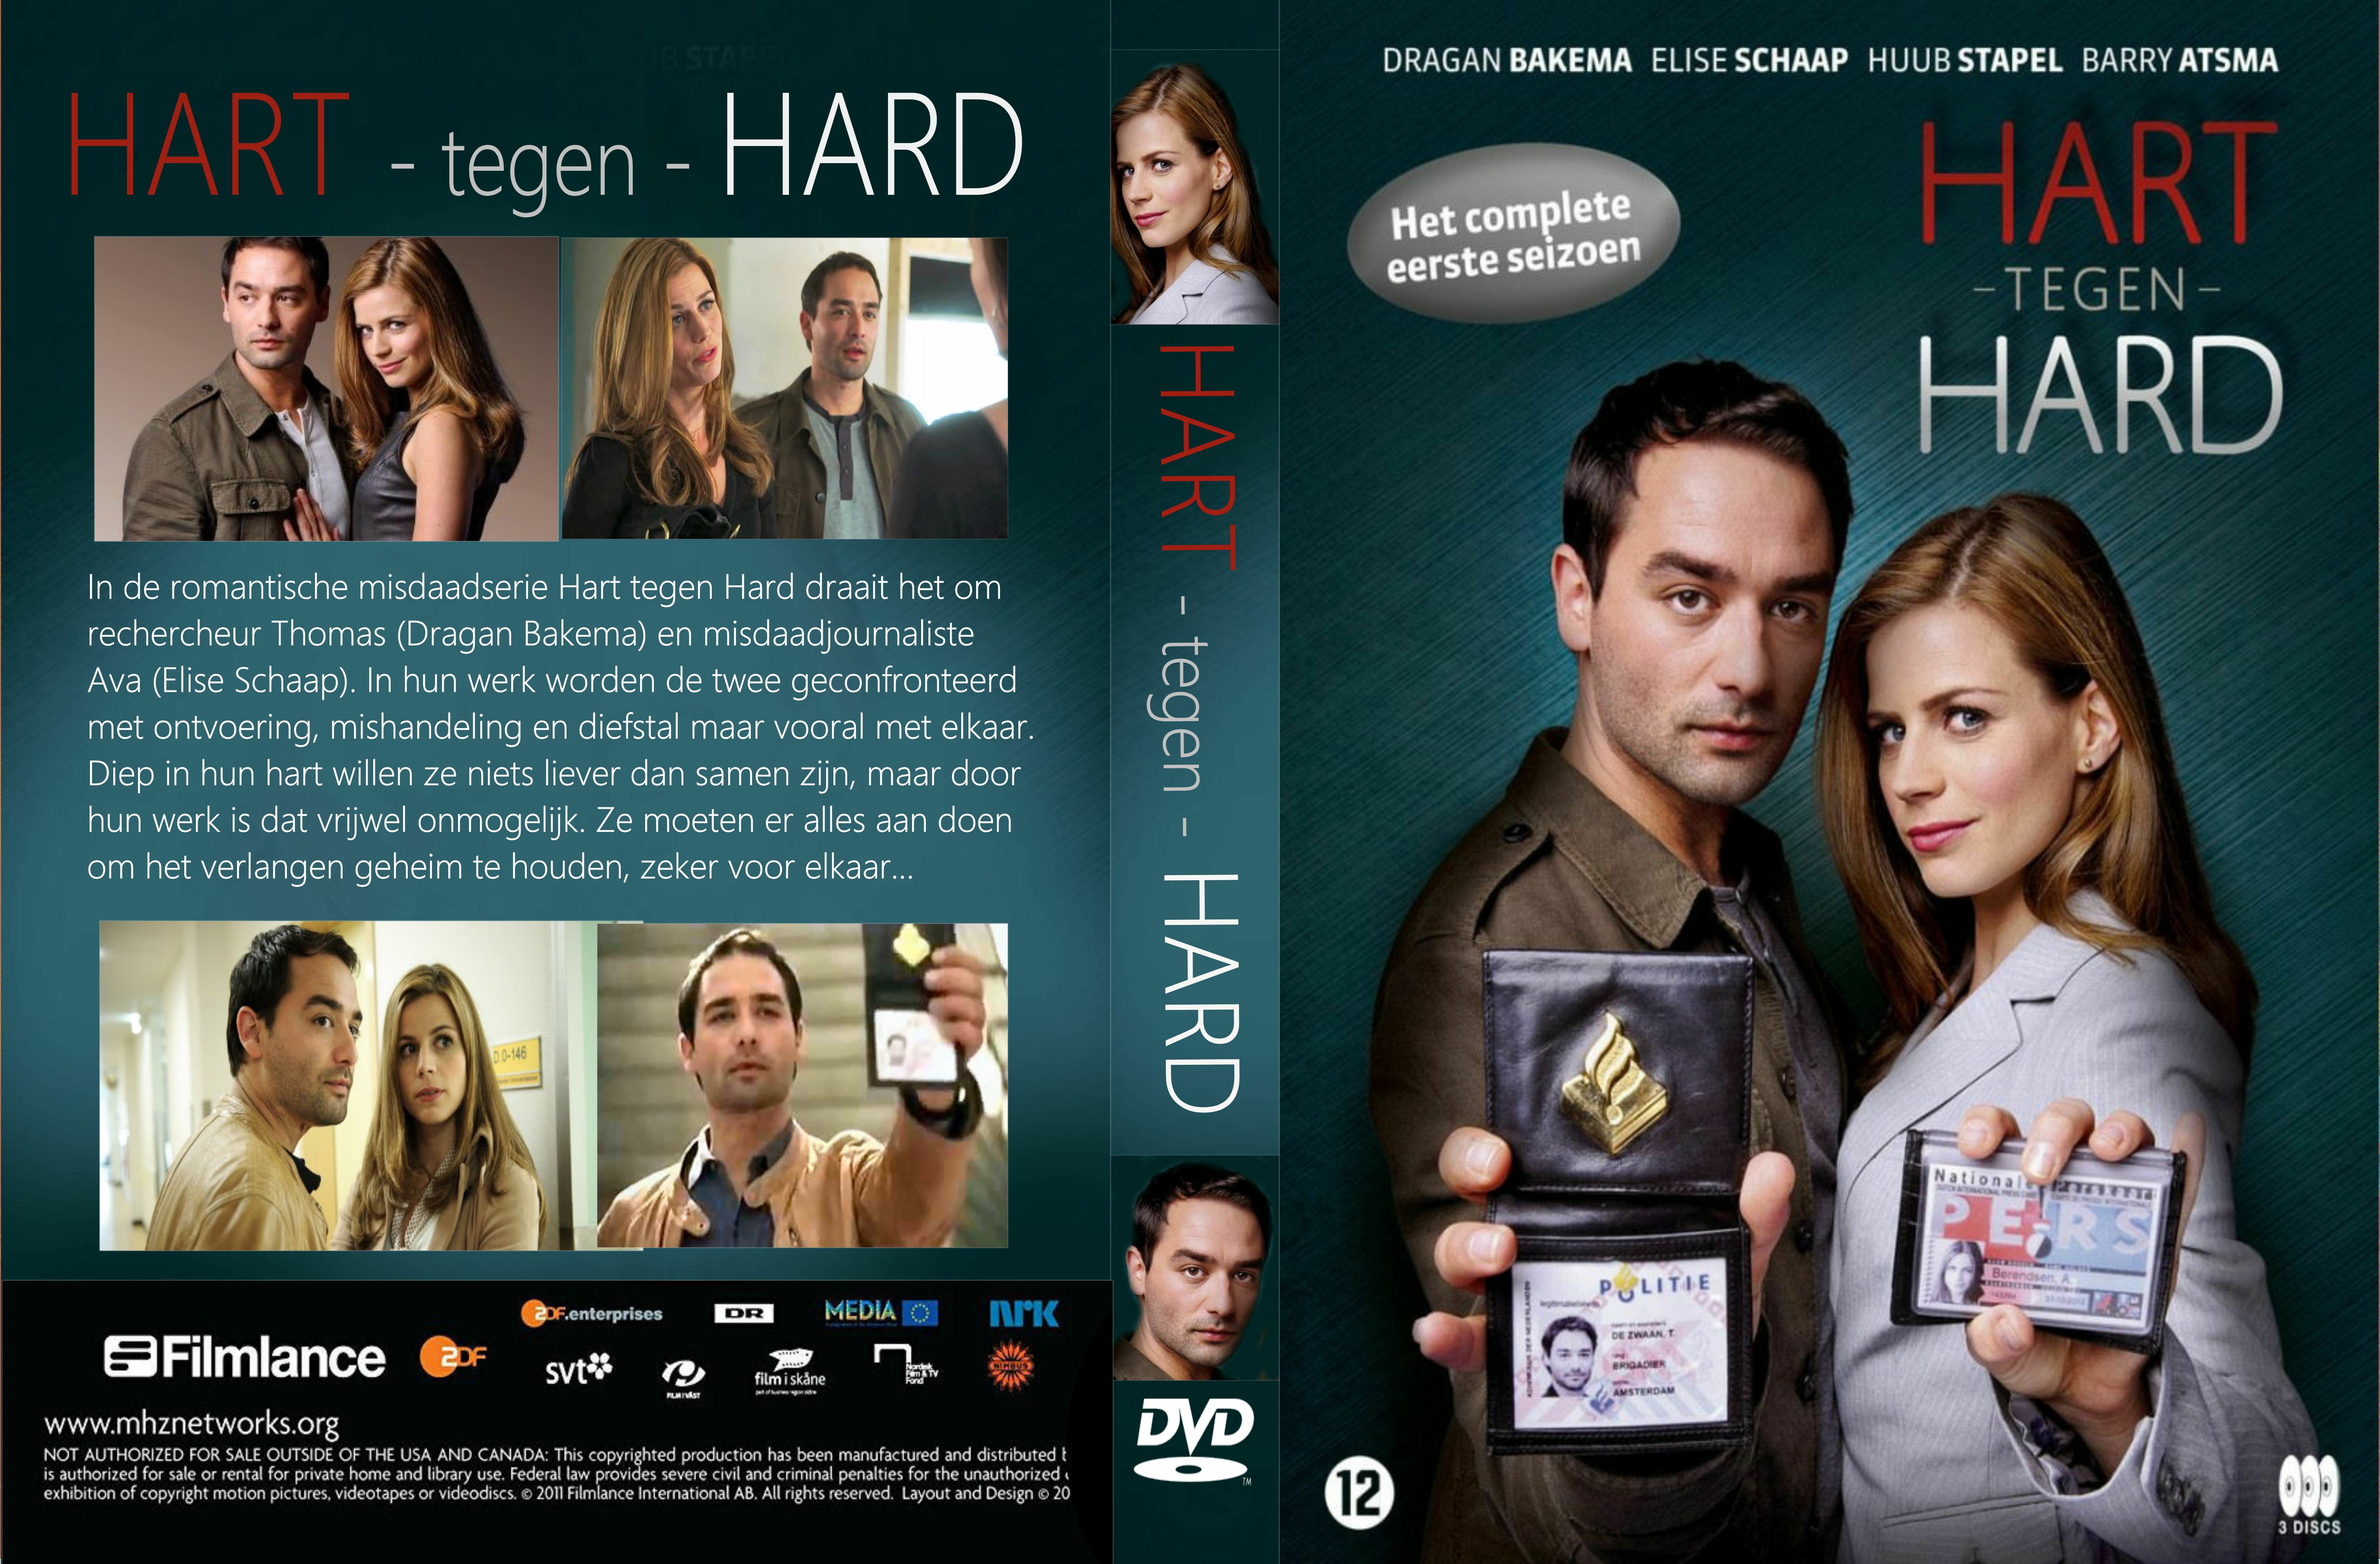 Hart Tegen Hard (2011) - DvD 3